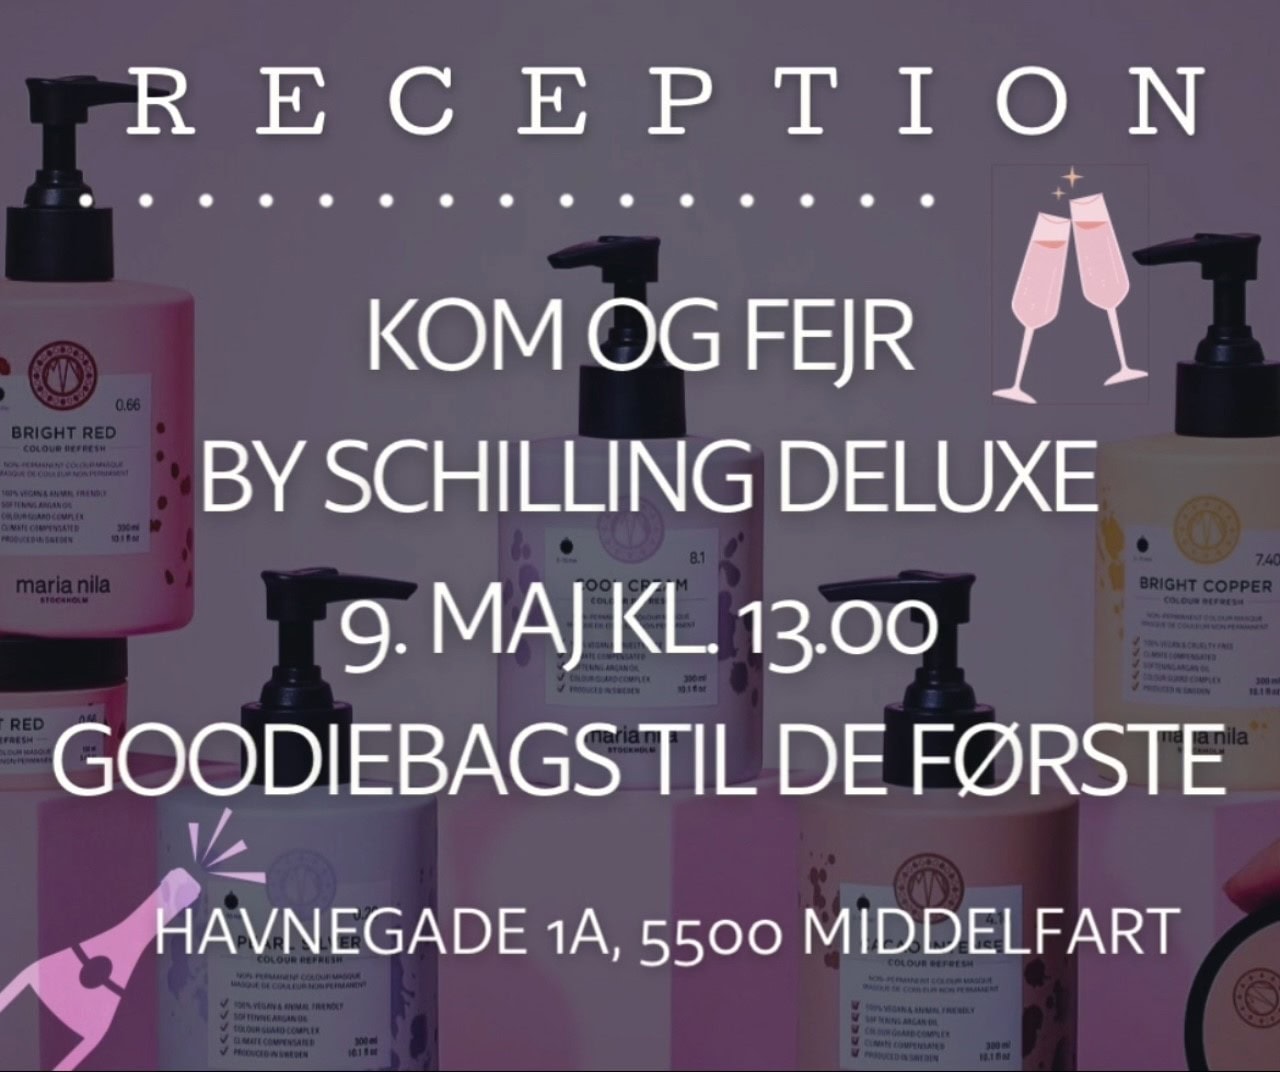 Kom og fejr By Schilling Deluxe 9. Maj kl. 13.00. Goodiebags til de første!